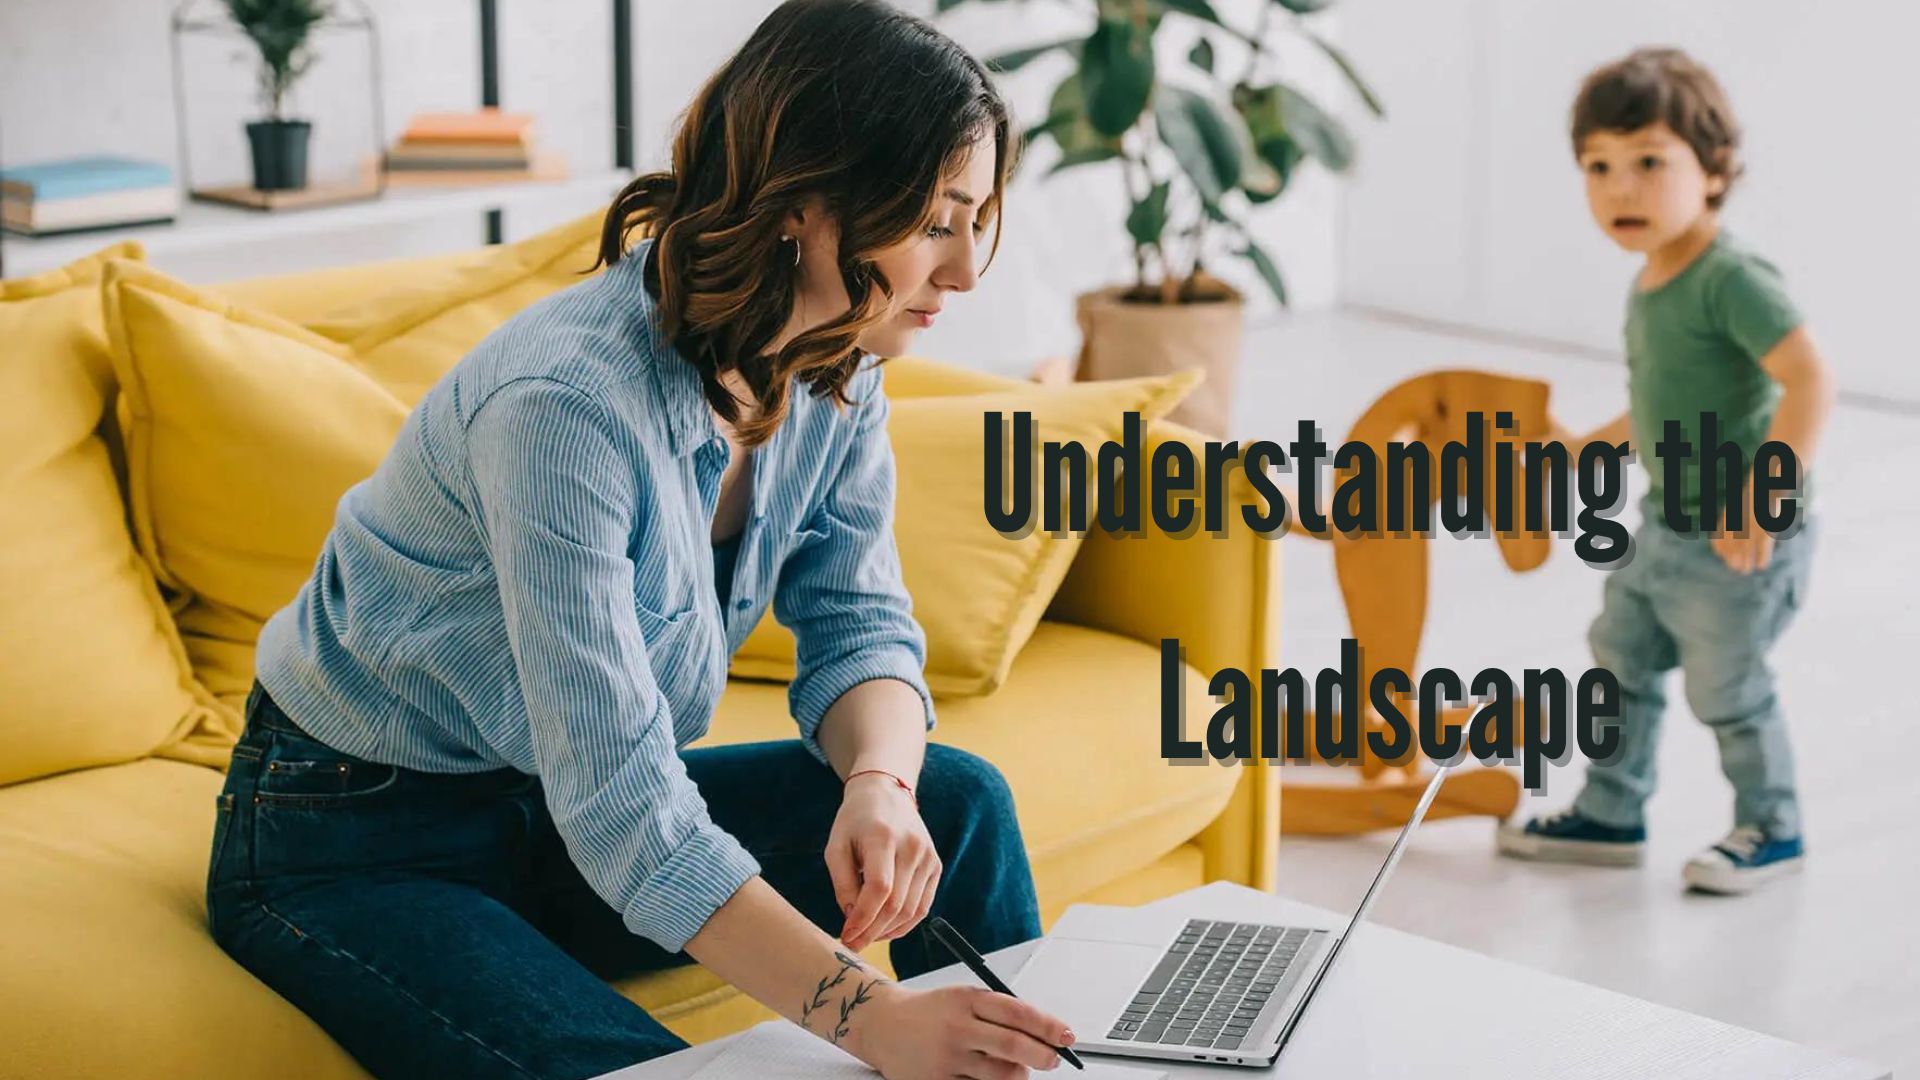 Understanding the Landscape